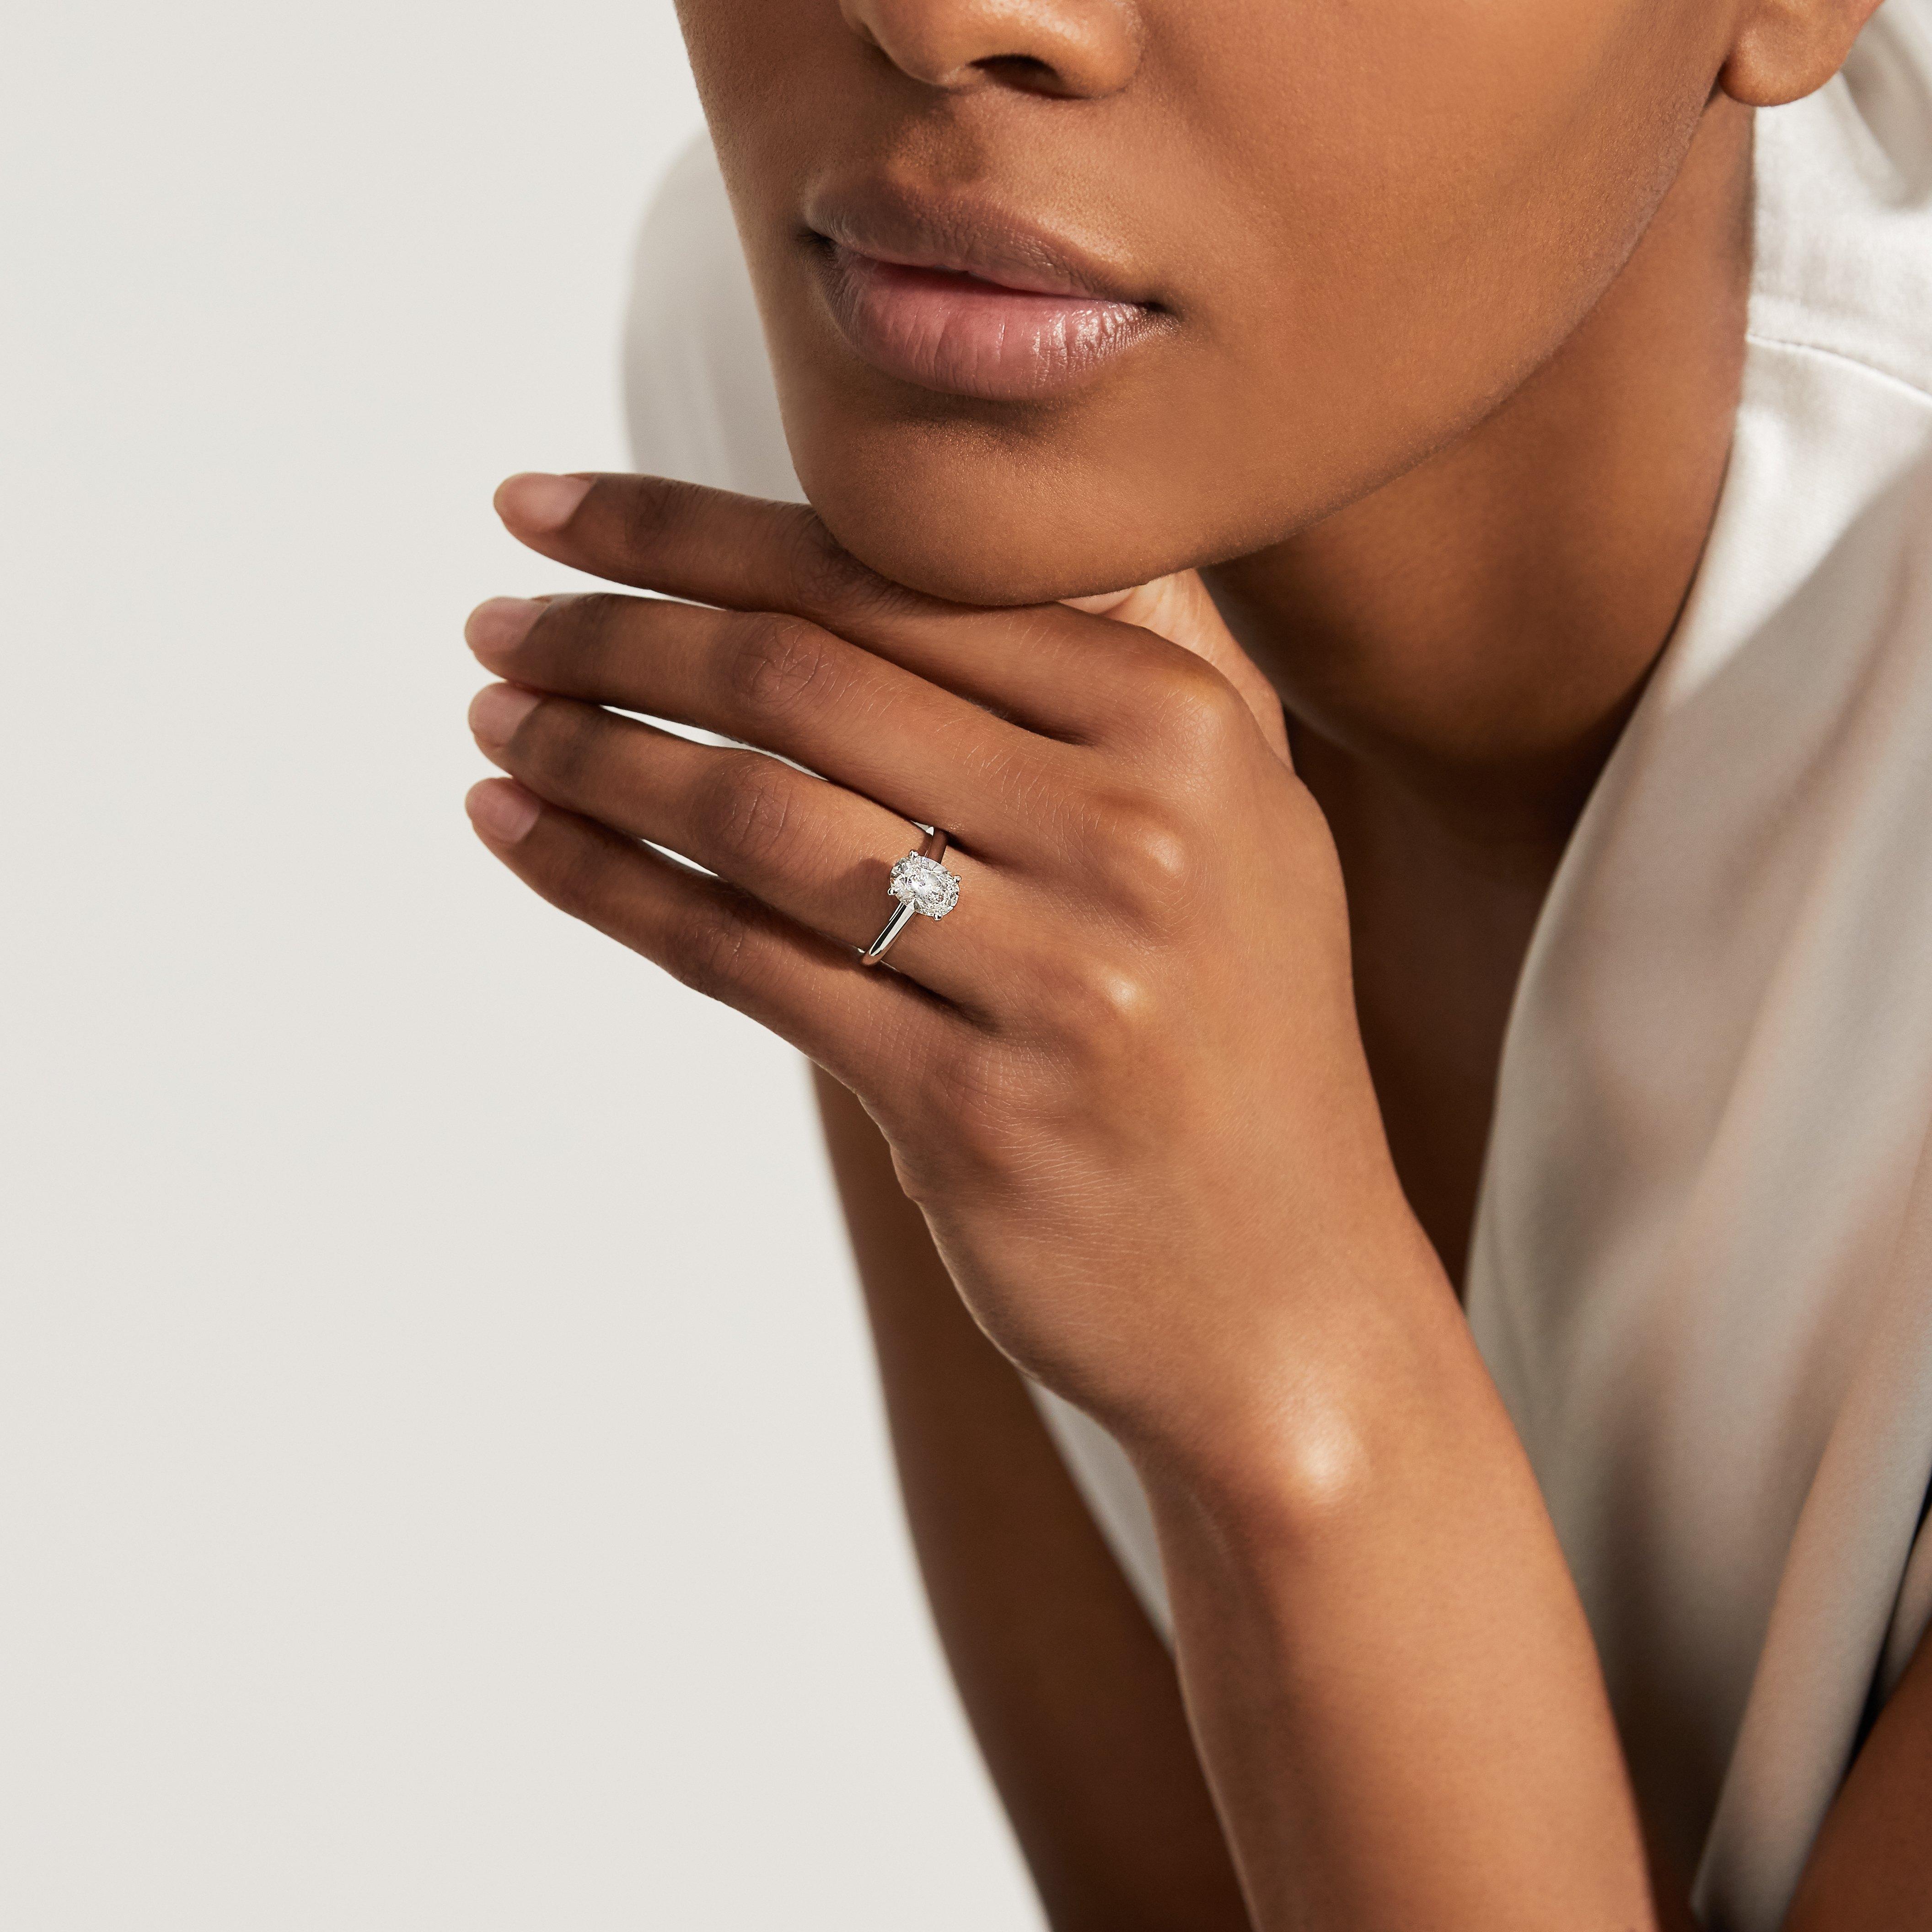 DB Classic oval-shaped diamond ring